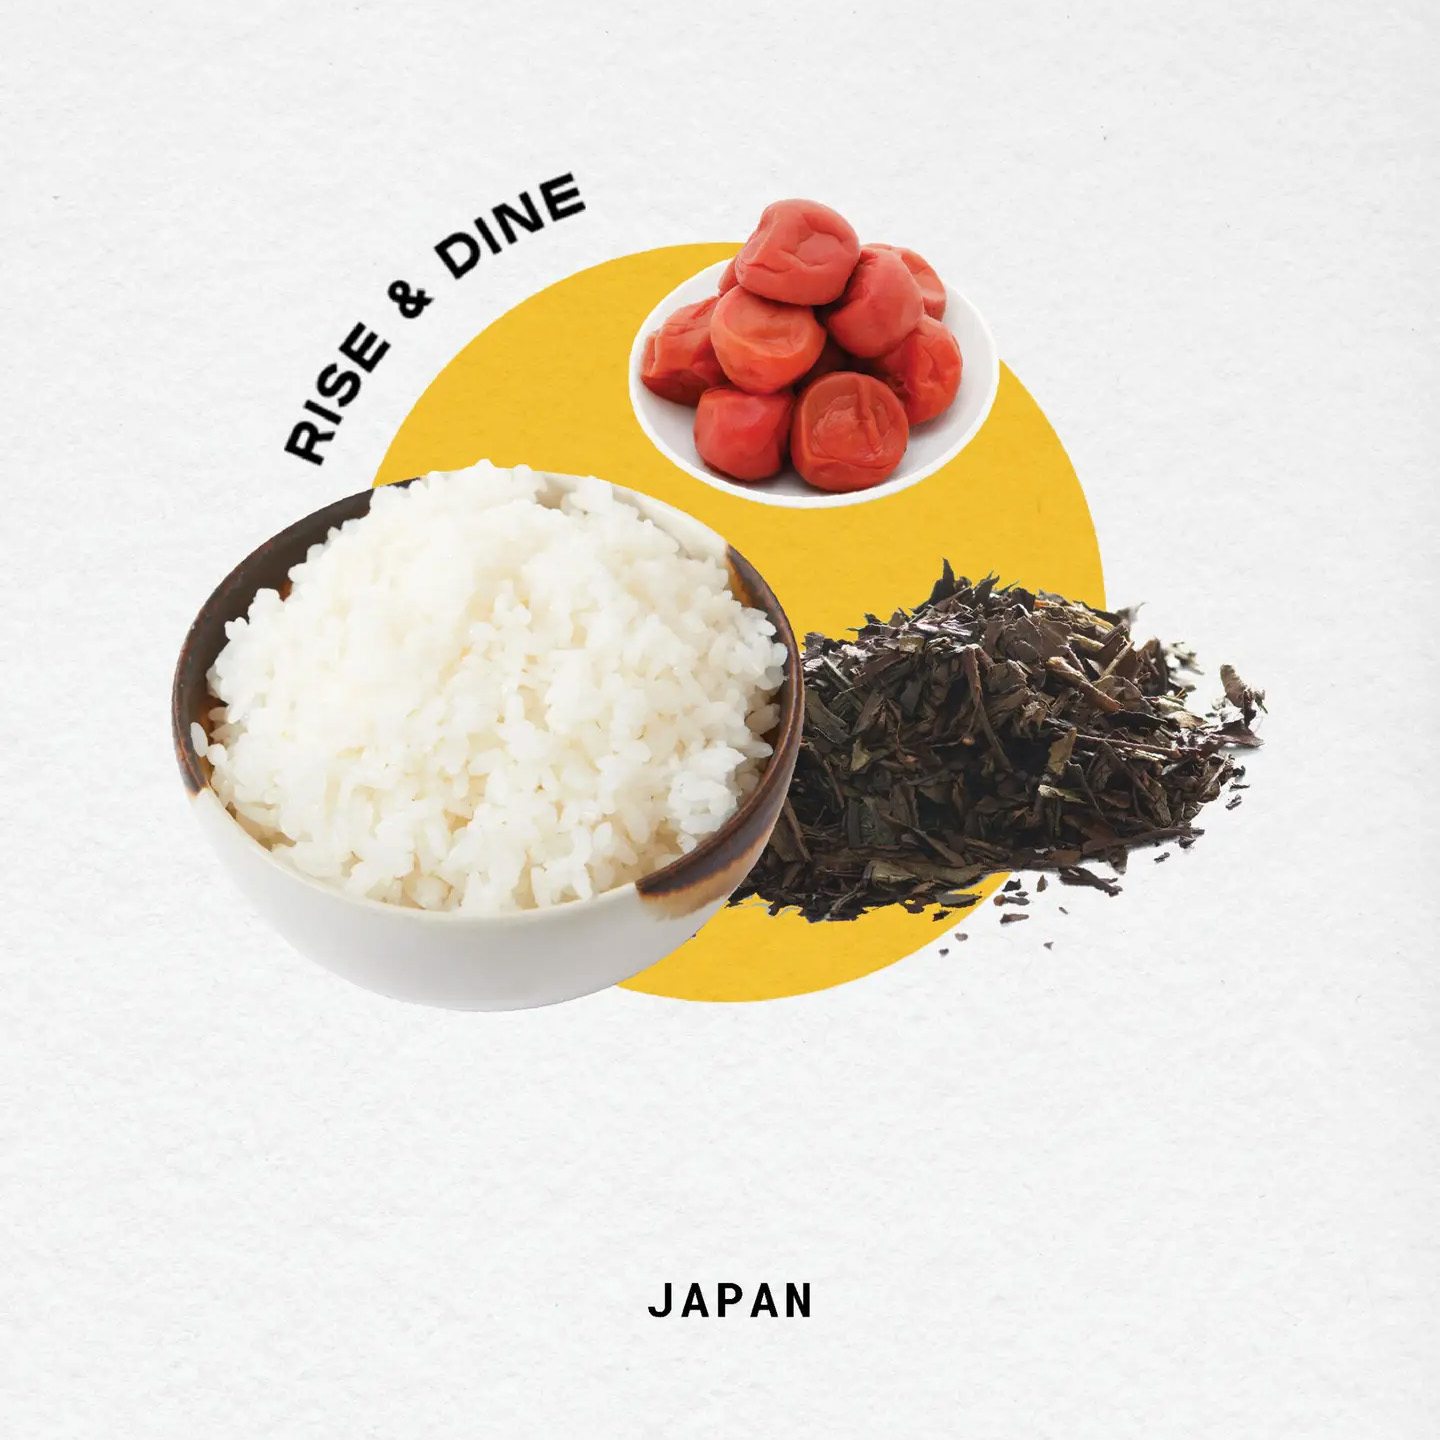 Seeking Mindfulness in a Bowl of Japanese Tea Porridge